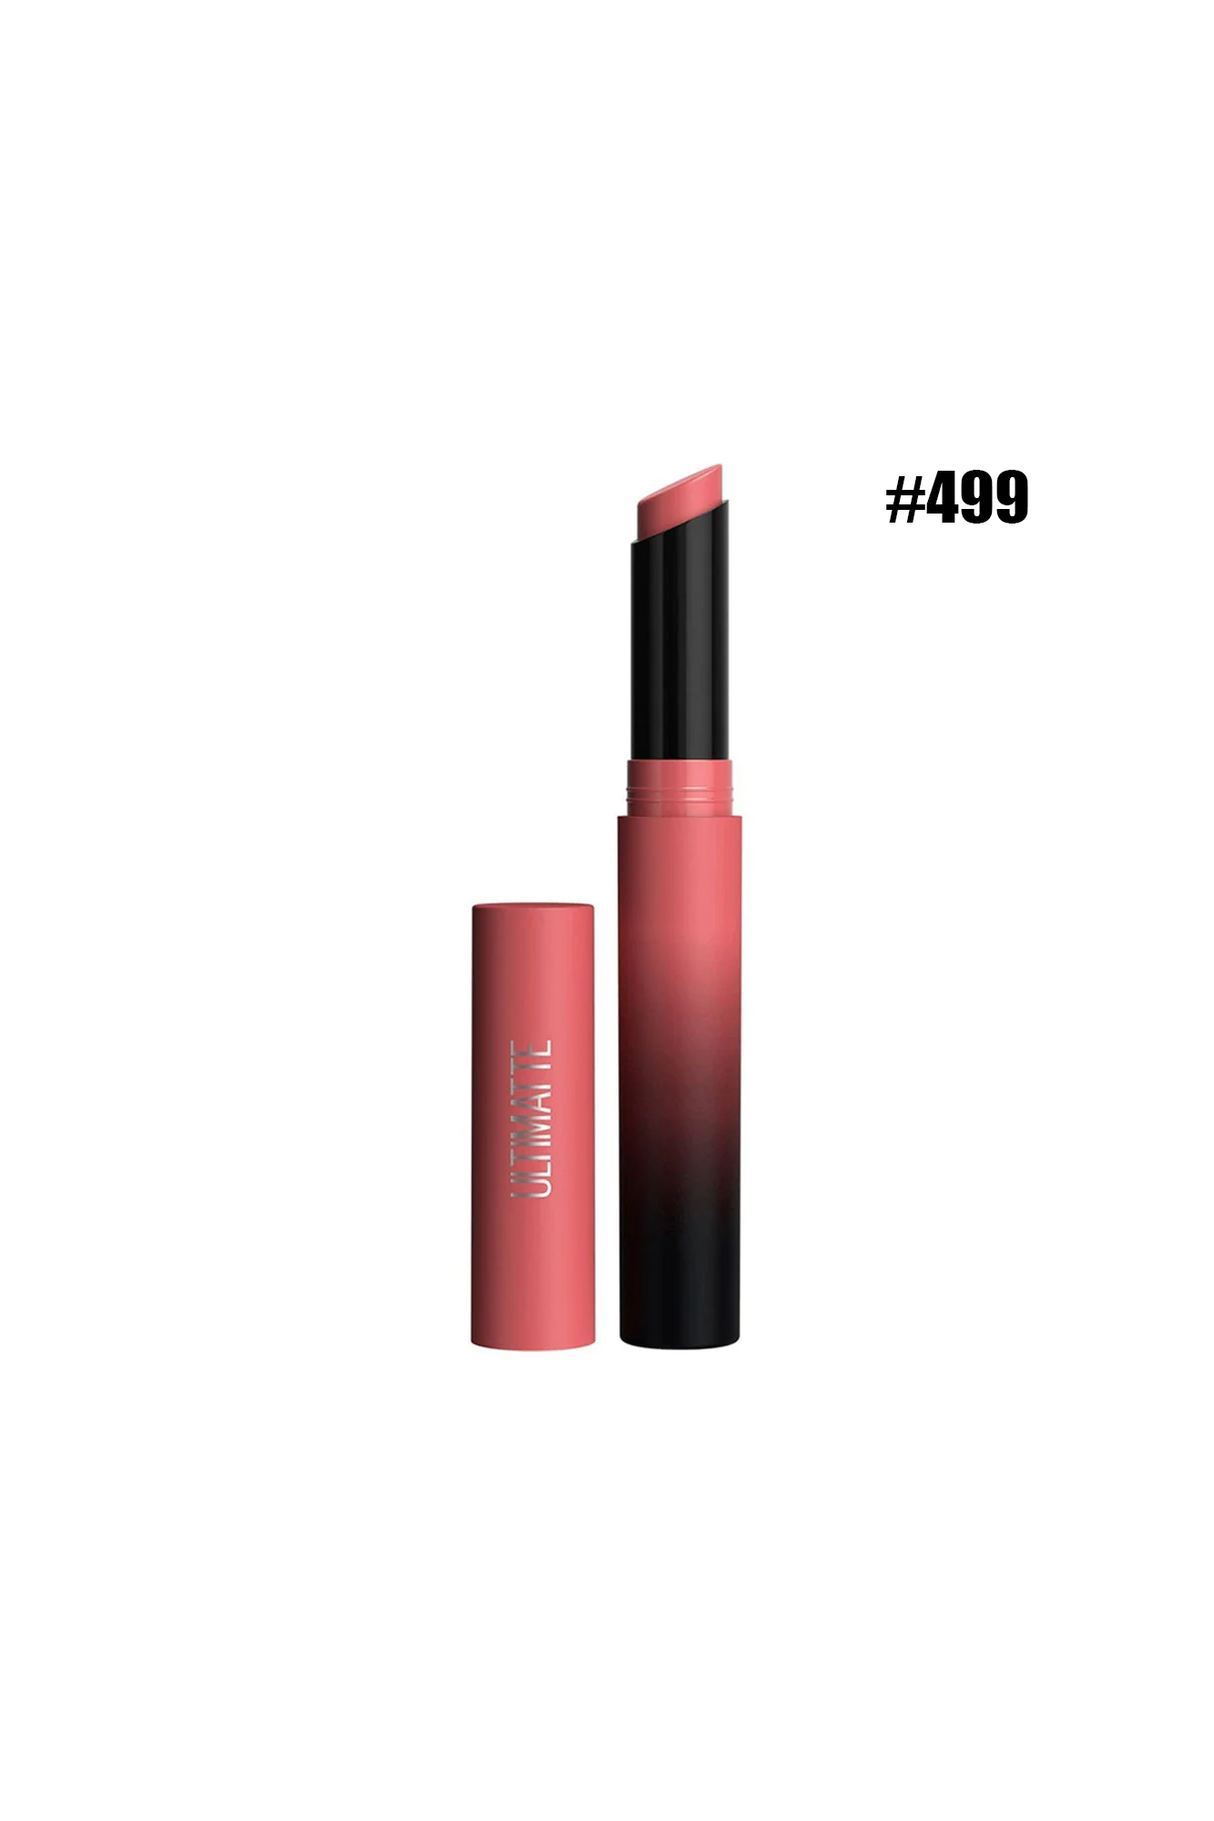 maybelline lipstick ultimatte 499